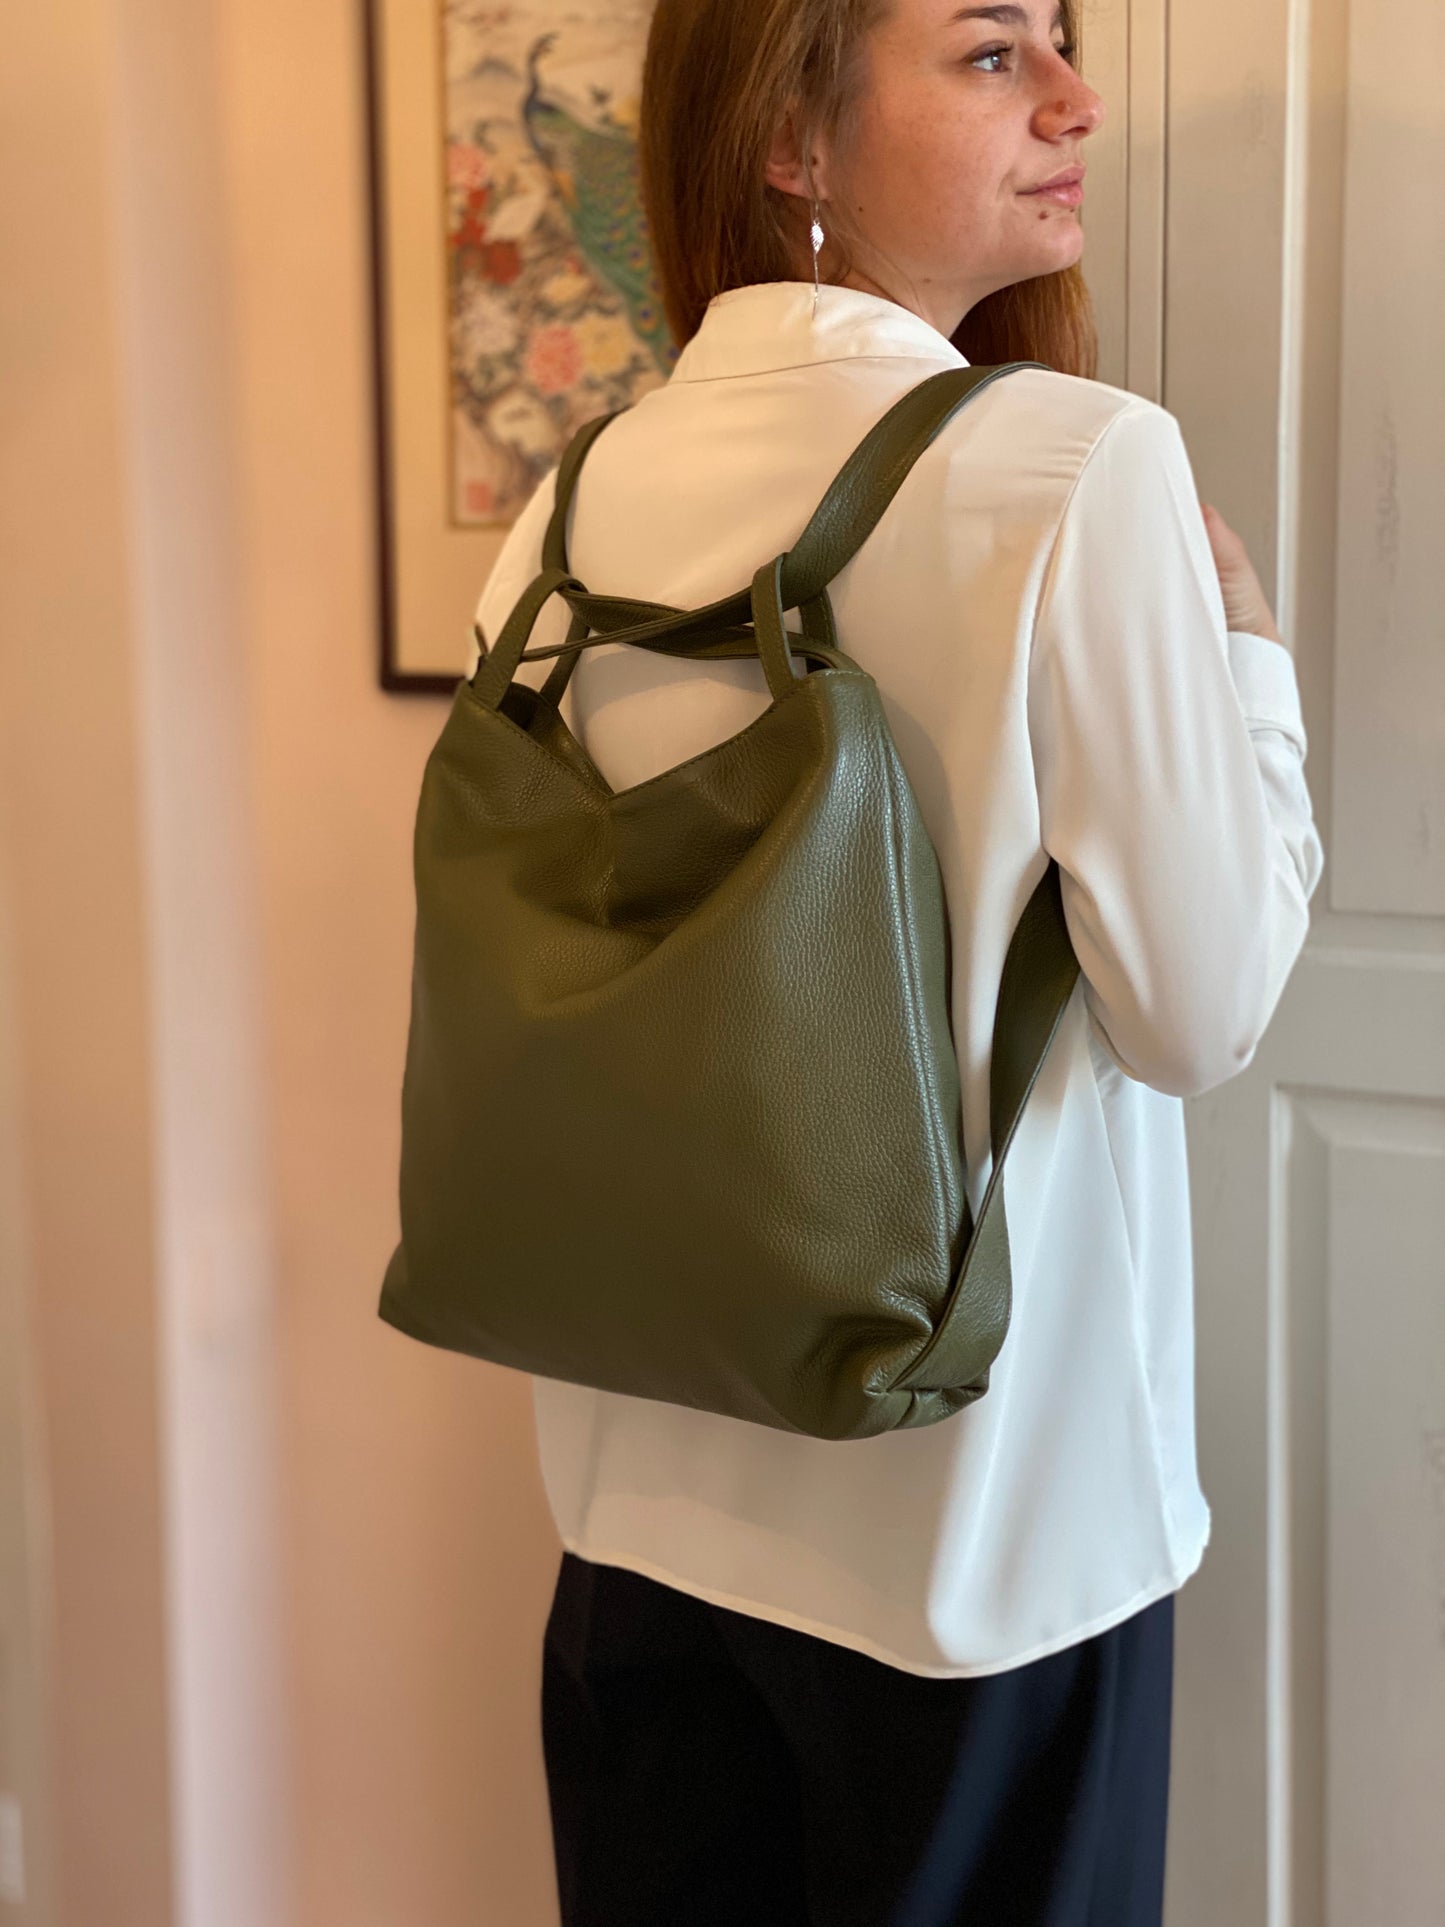 A model wearing the Samona as a backpack